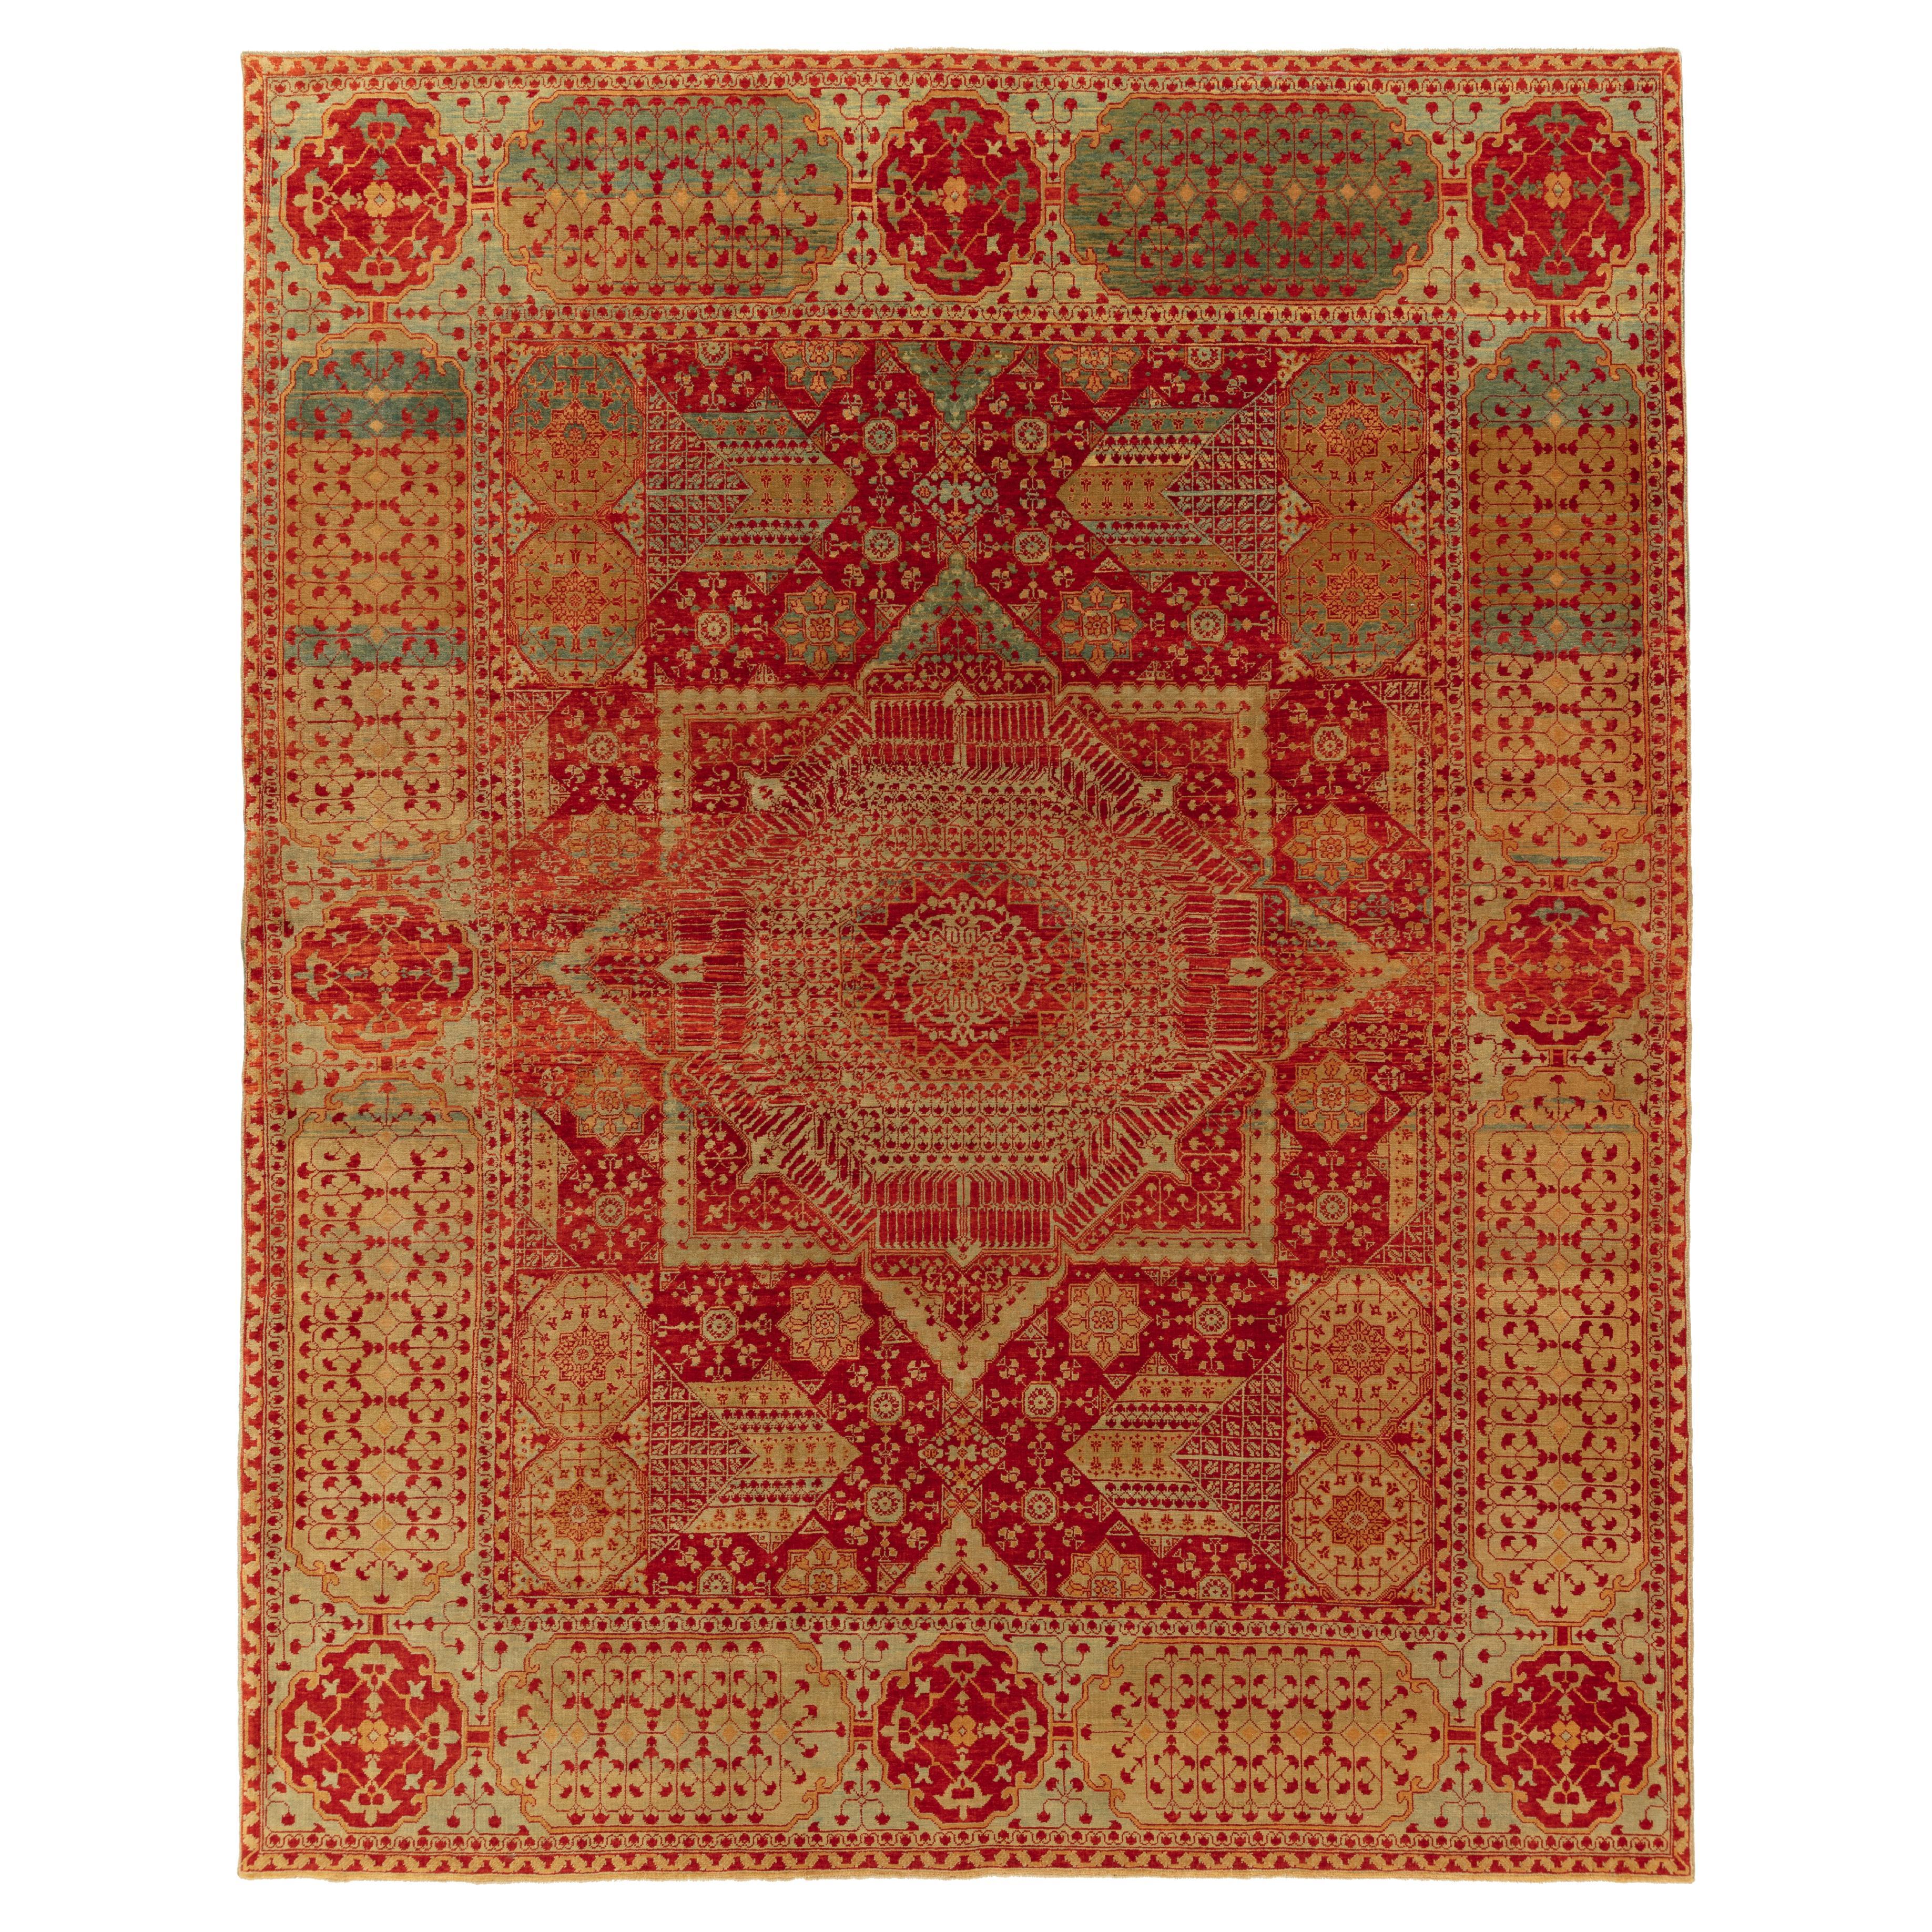 Ararat Rugs The Simonetti Mamluk Carpet 16th Century Revival Rug - Natural Dyed 